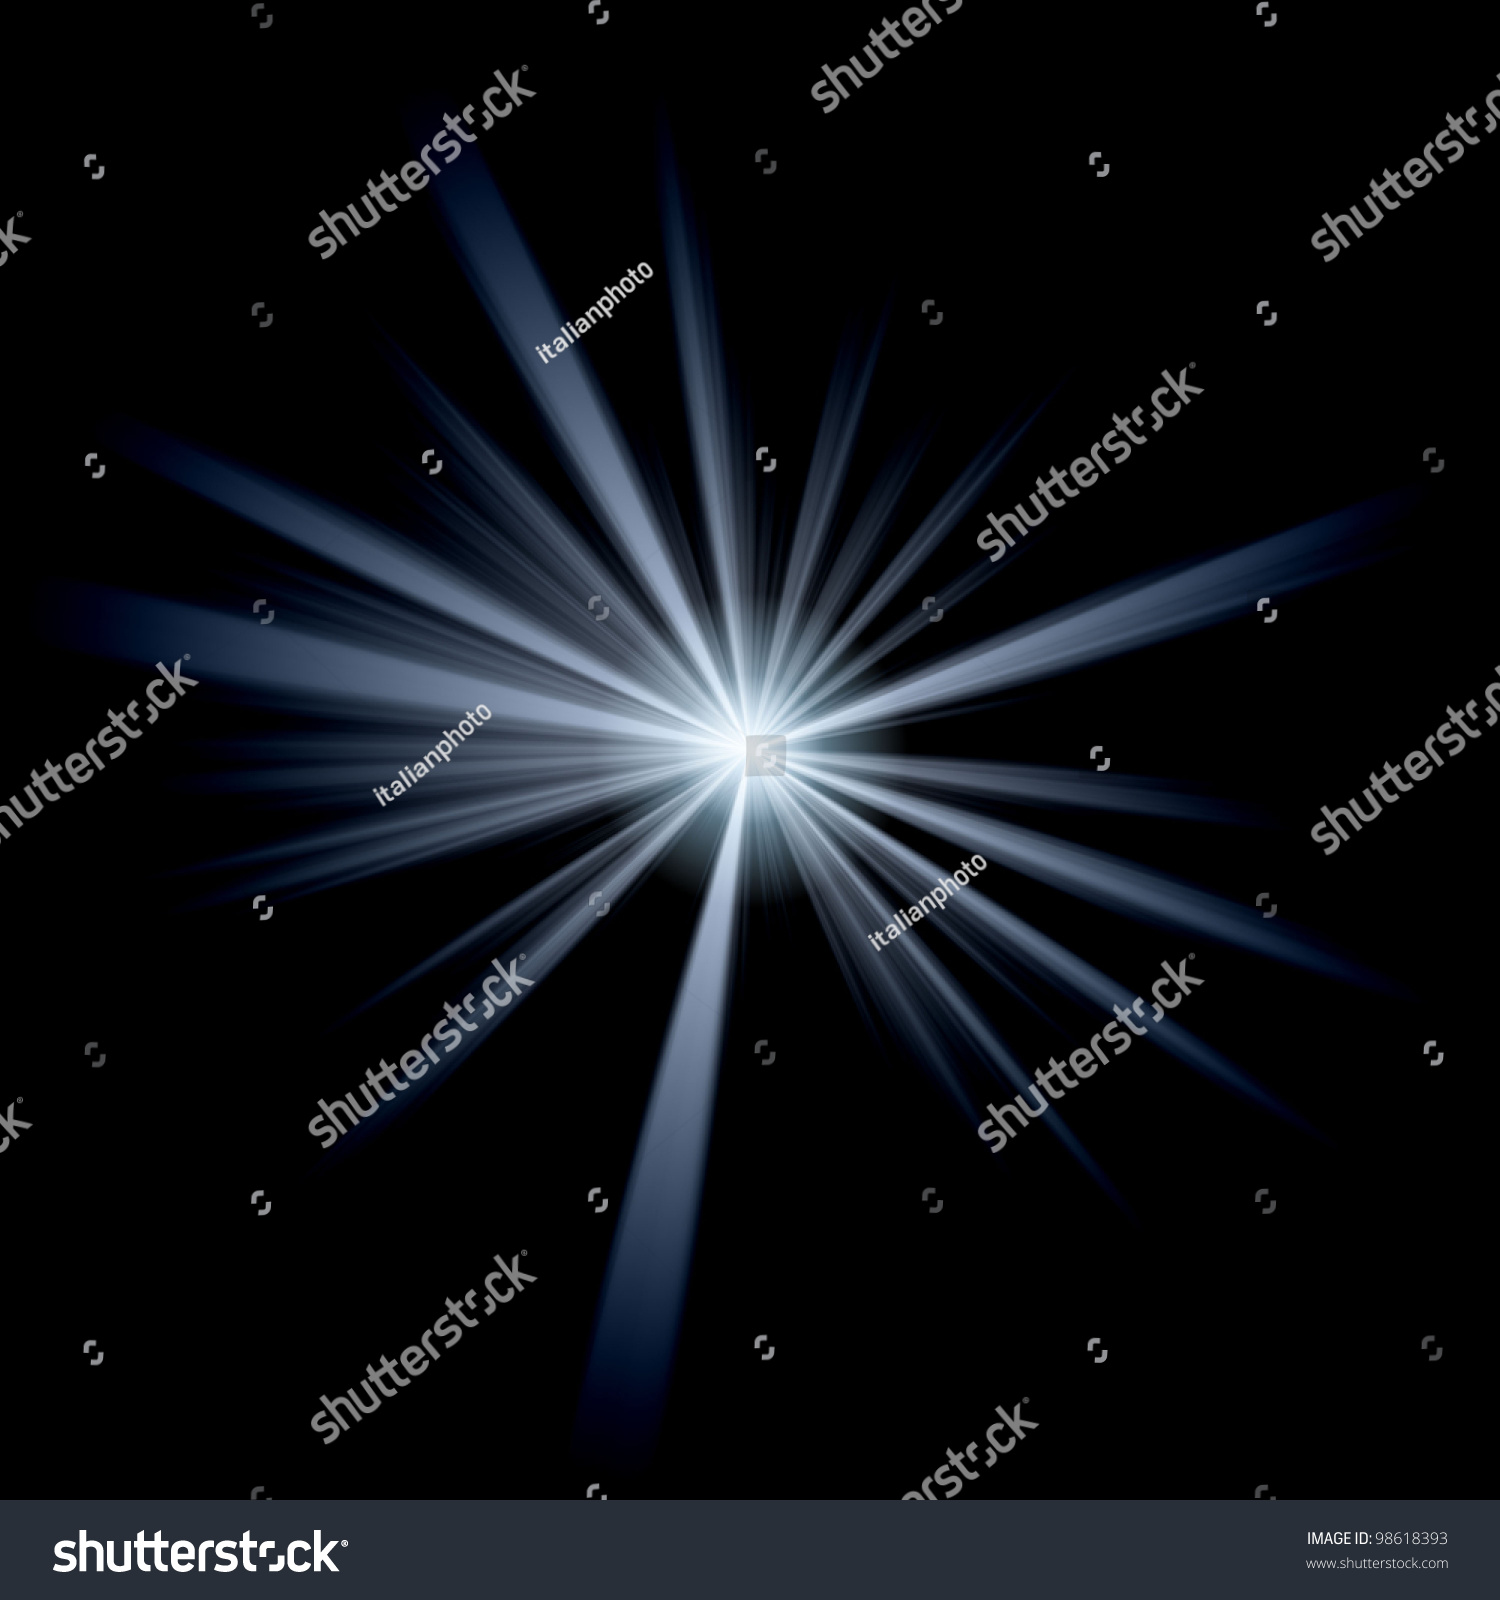 White Star On Black Background Stock Photo 98618393 : Shutterstock